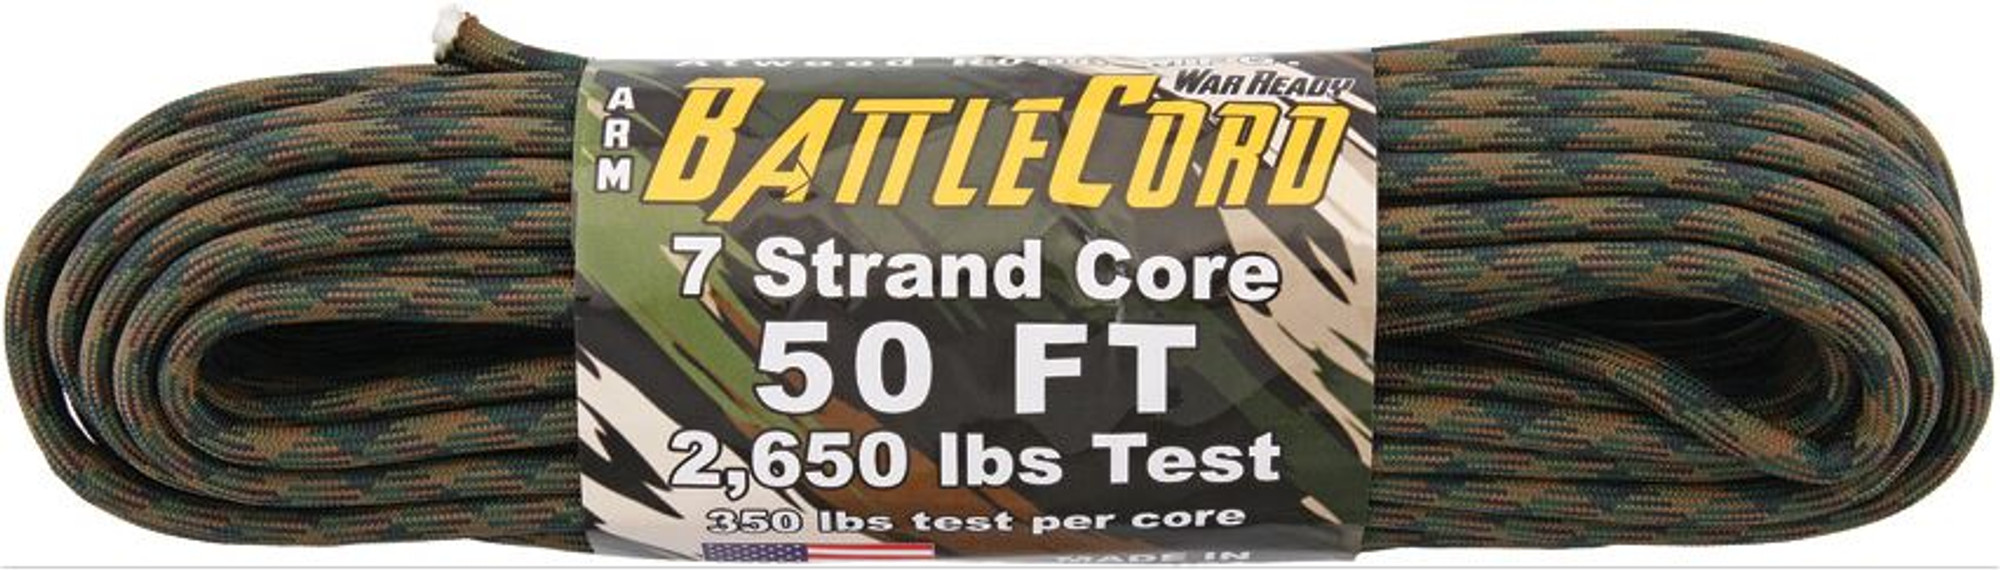 ARM BattleCord 2650 lb, 50 Ft. - Woodland Camo